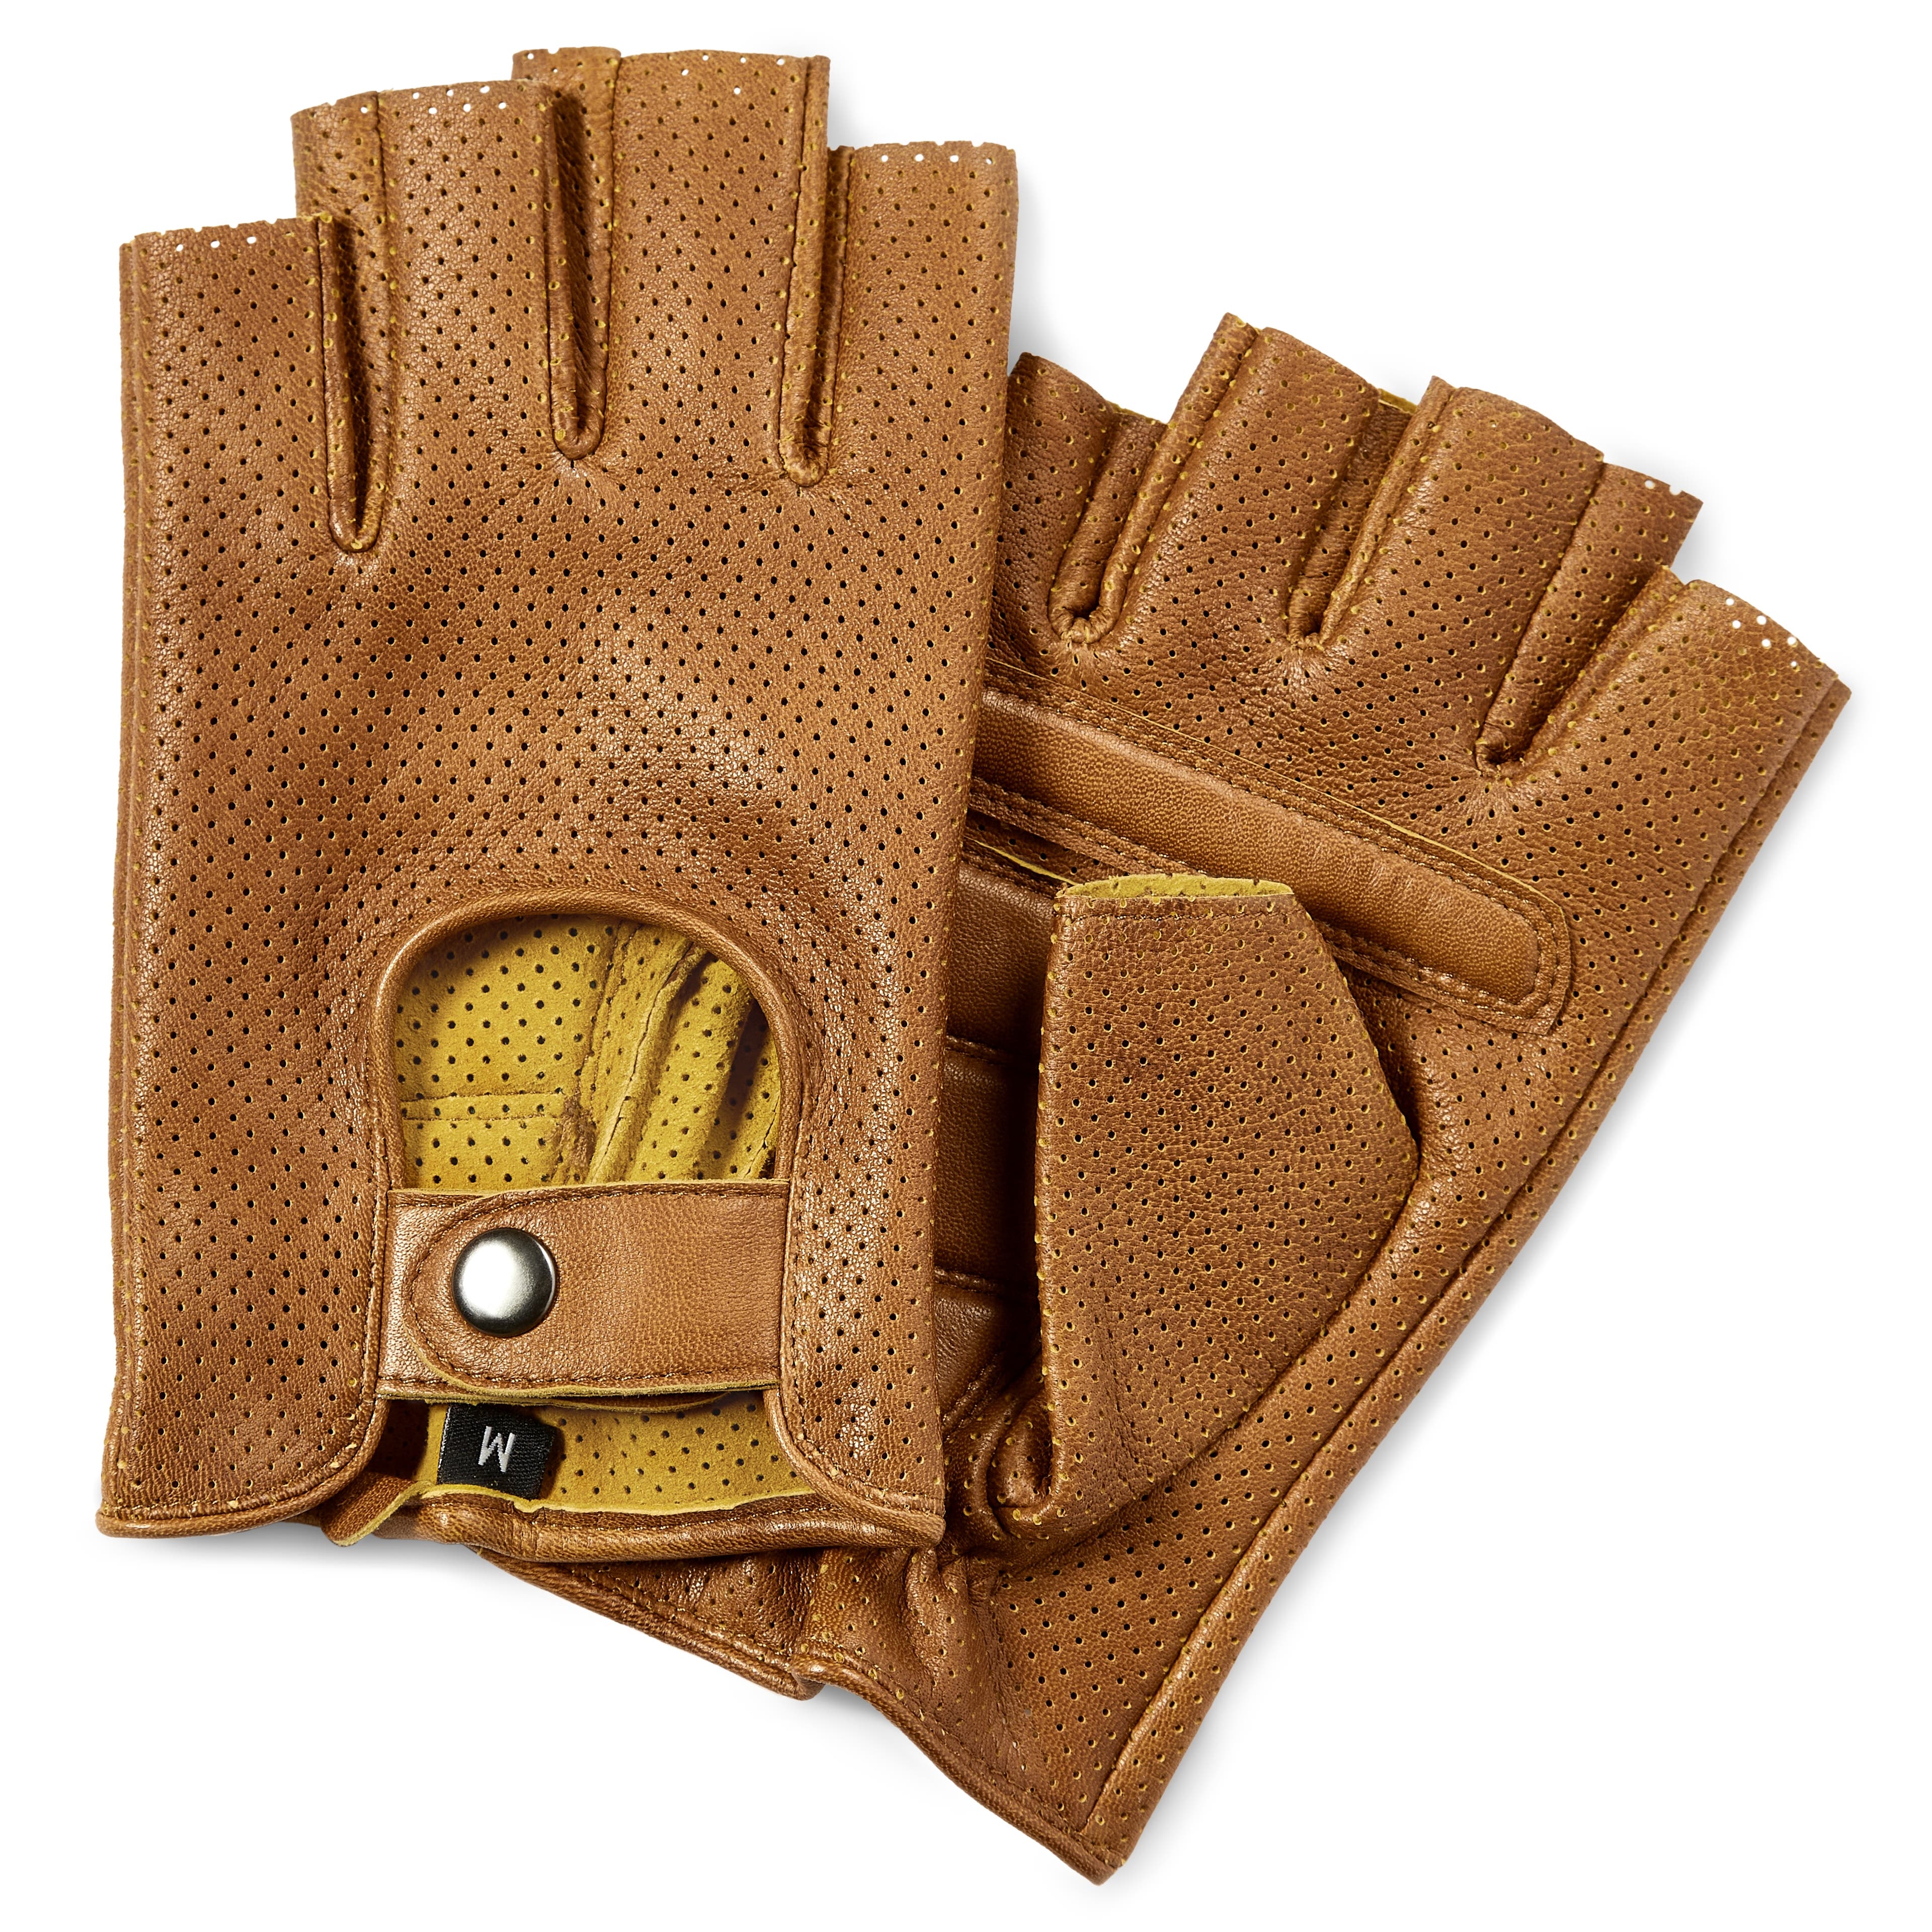 Fingerless Long Leather Gloves/ Super Soft Black Leather 